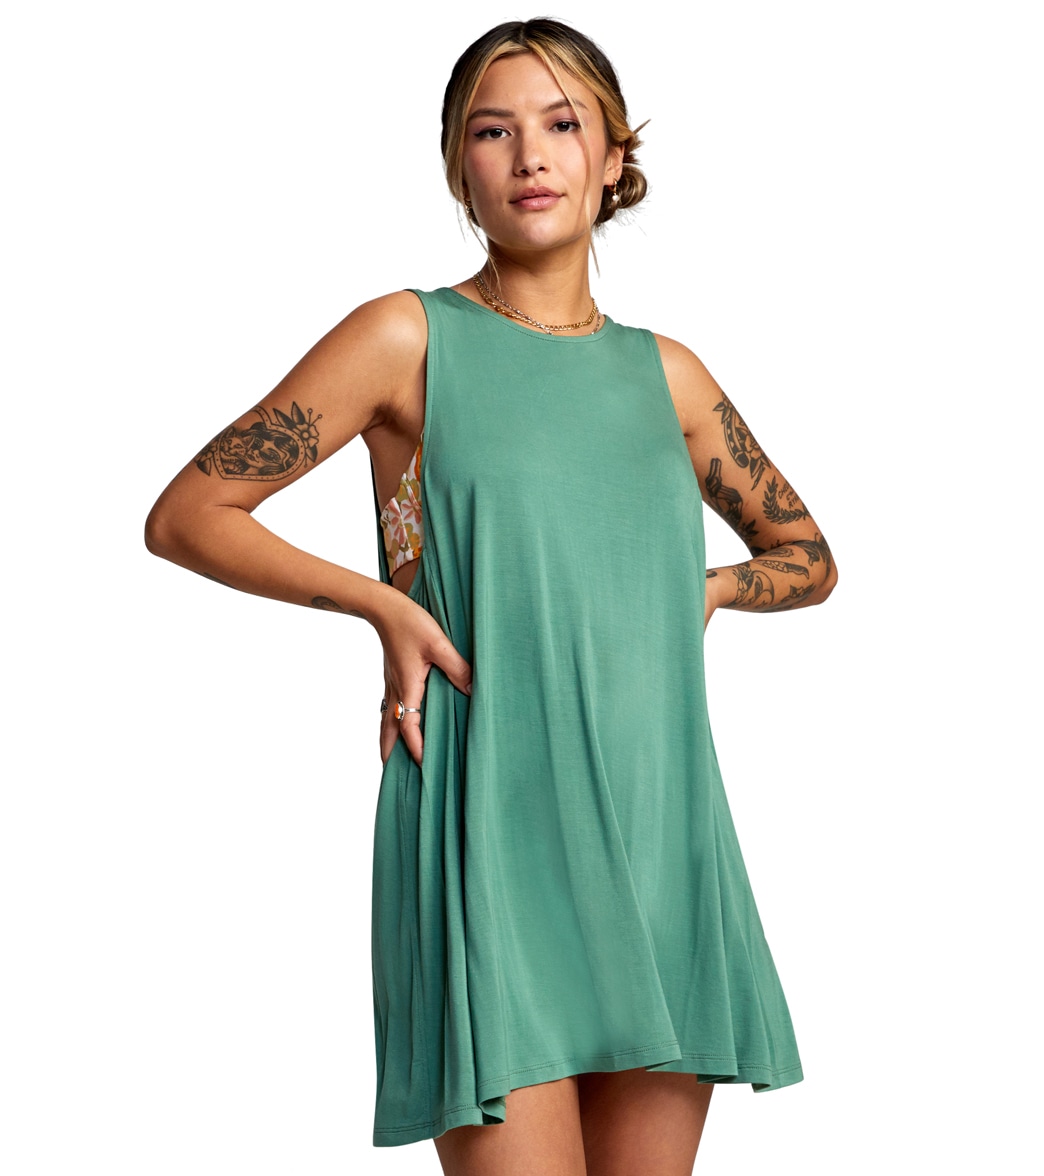 Rvca Women's Eclipse Dress - Green Ivy Large - Swimoutlet.com